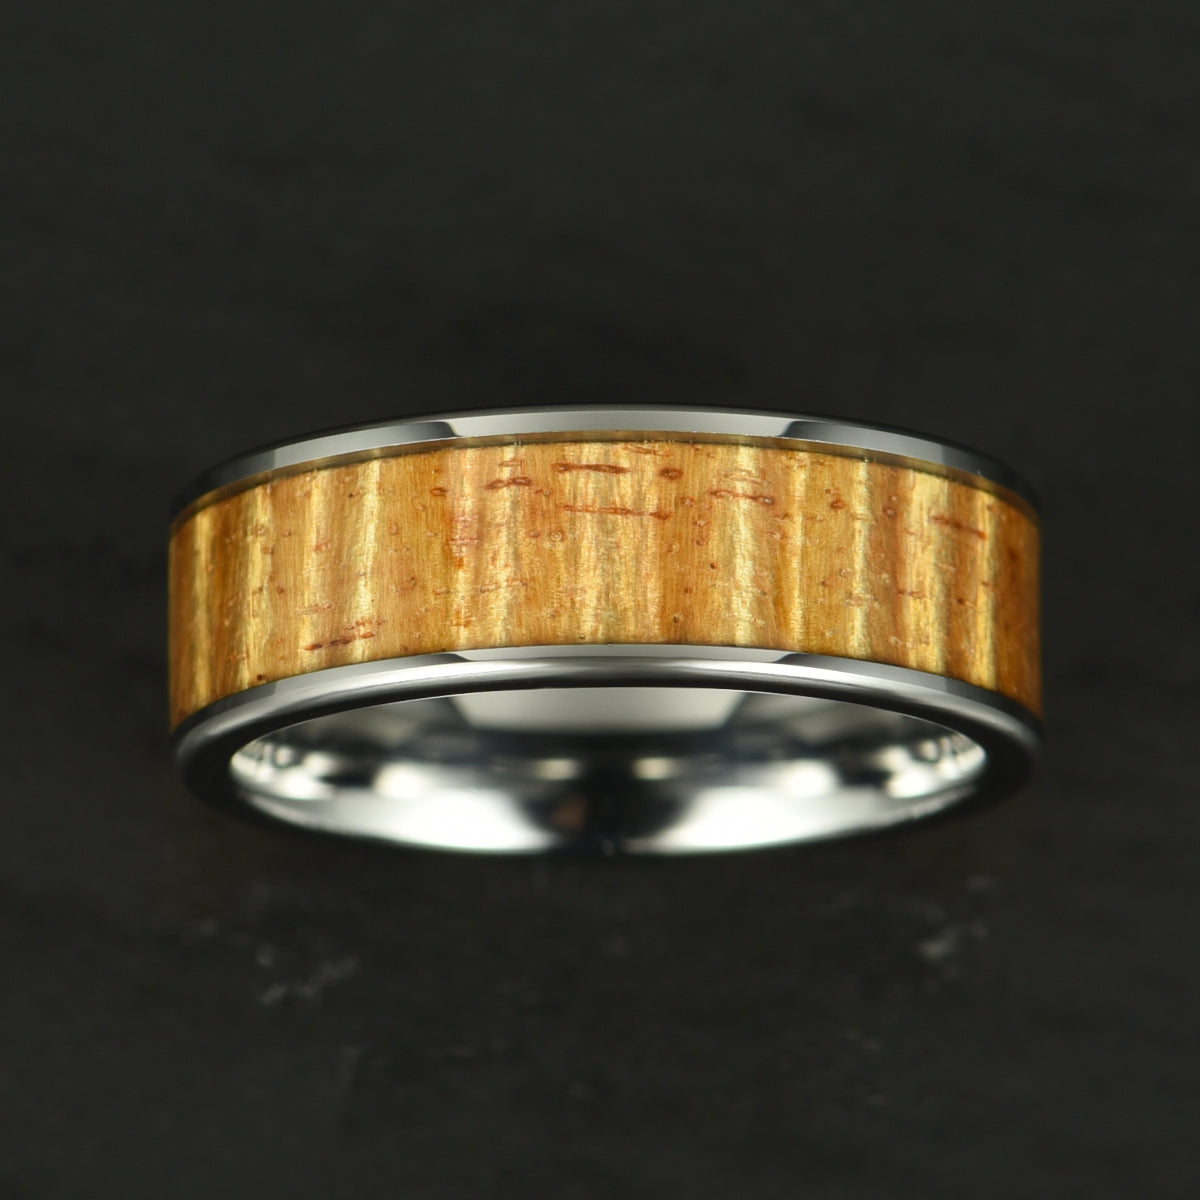 Hawaiian Koa Wood Tungsten Mens Wedding Ring 8MM - PRISTINE RINGS